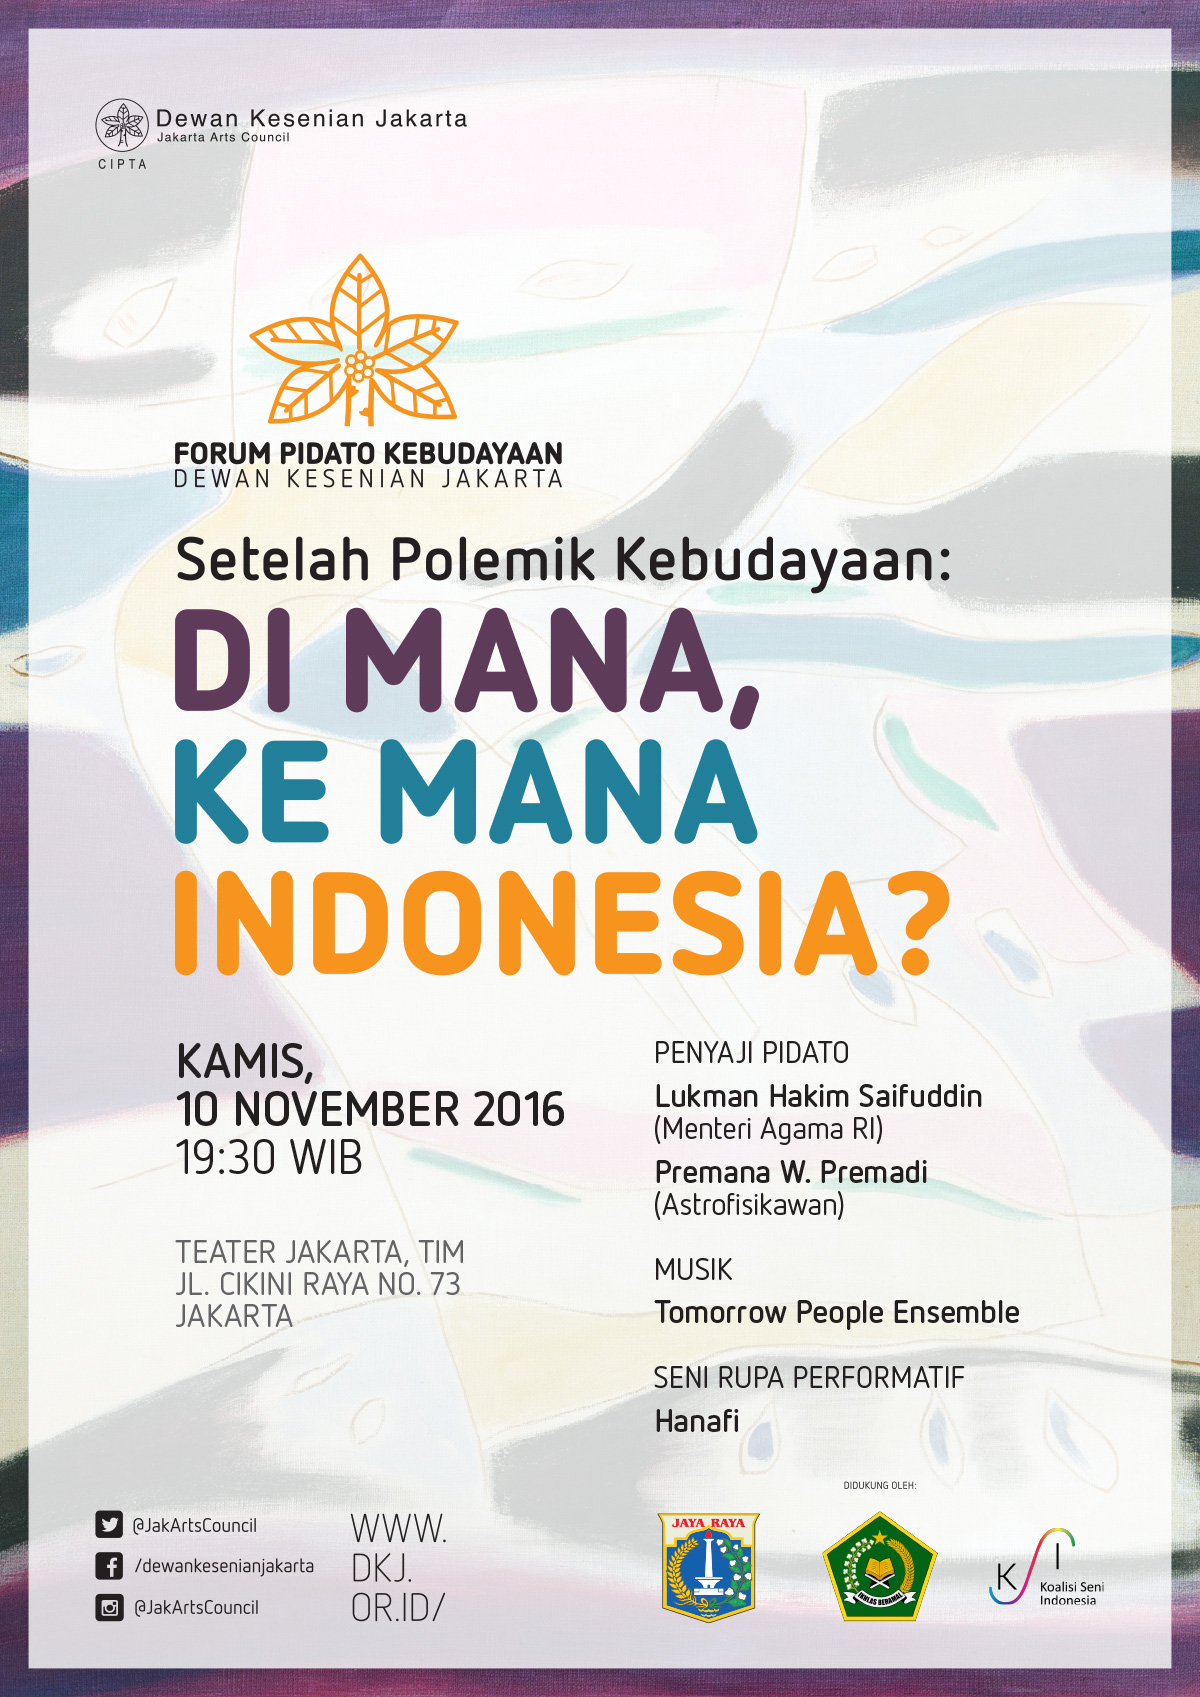 Pada 10 November 2016, Dewan Kesenian Jakarta (DKJ) akan menyelenggarakan pidato kebudayaan dengan format baru, yaitu berbentuk Forum Pidato Kebudayaan.